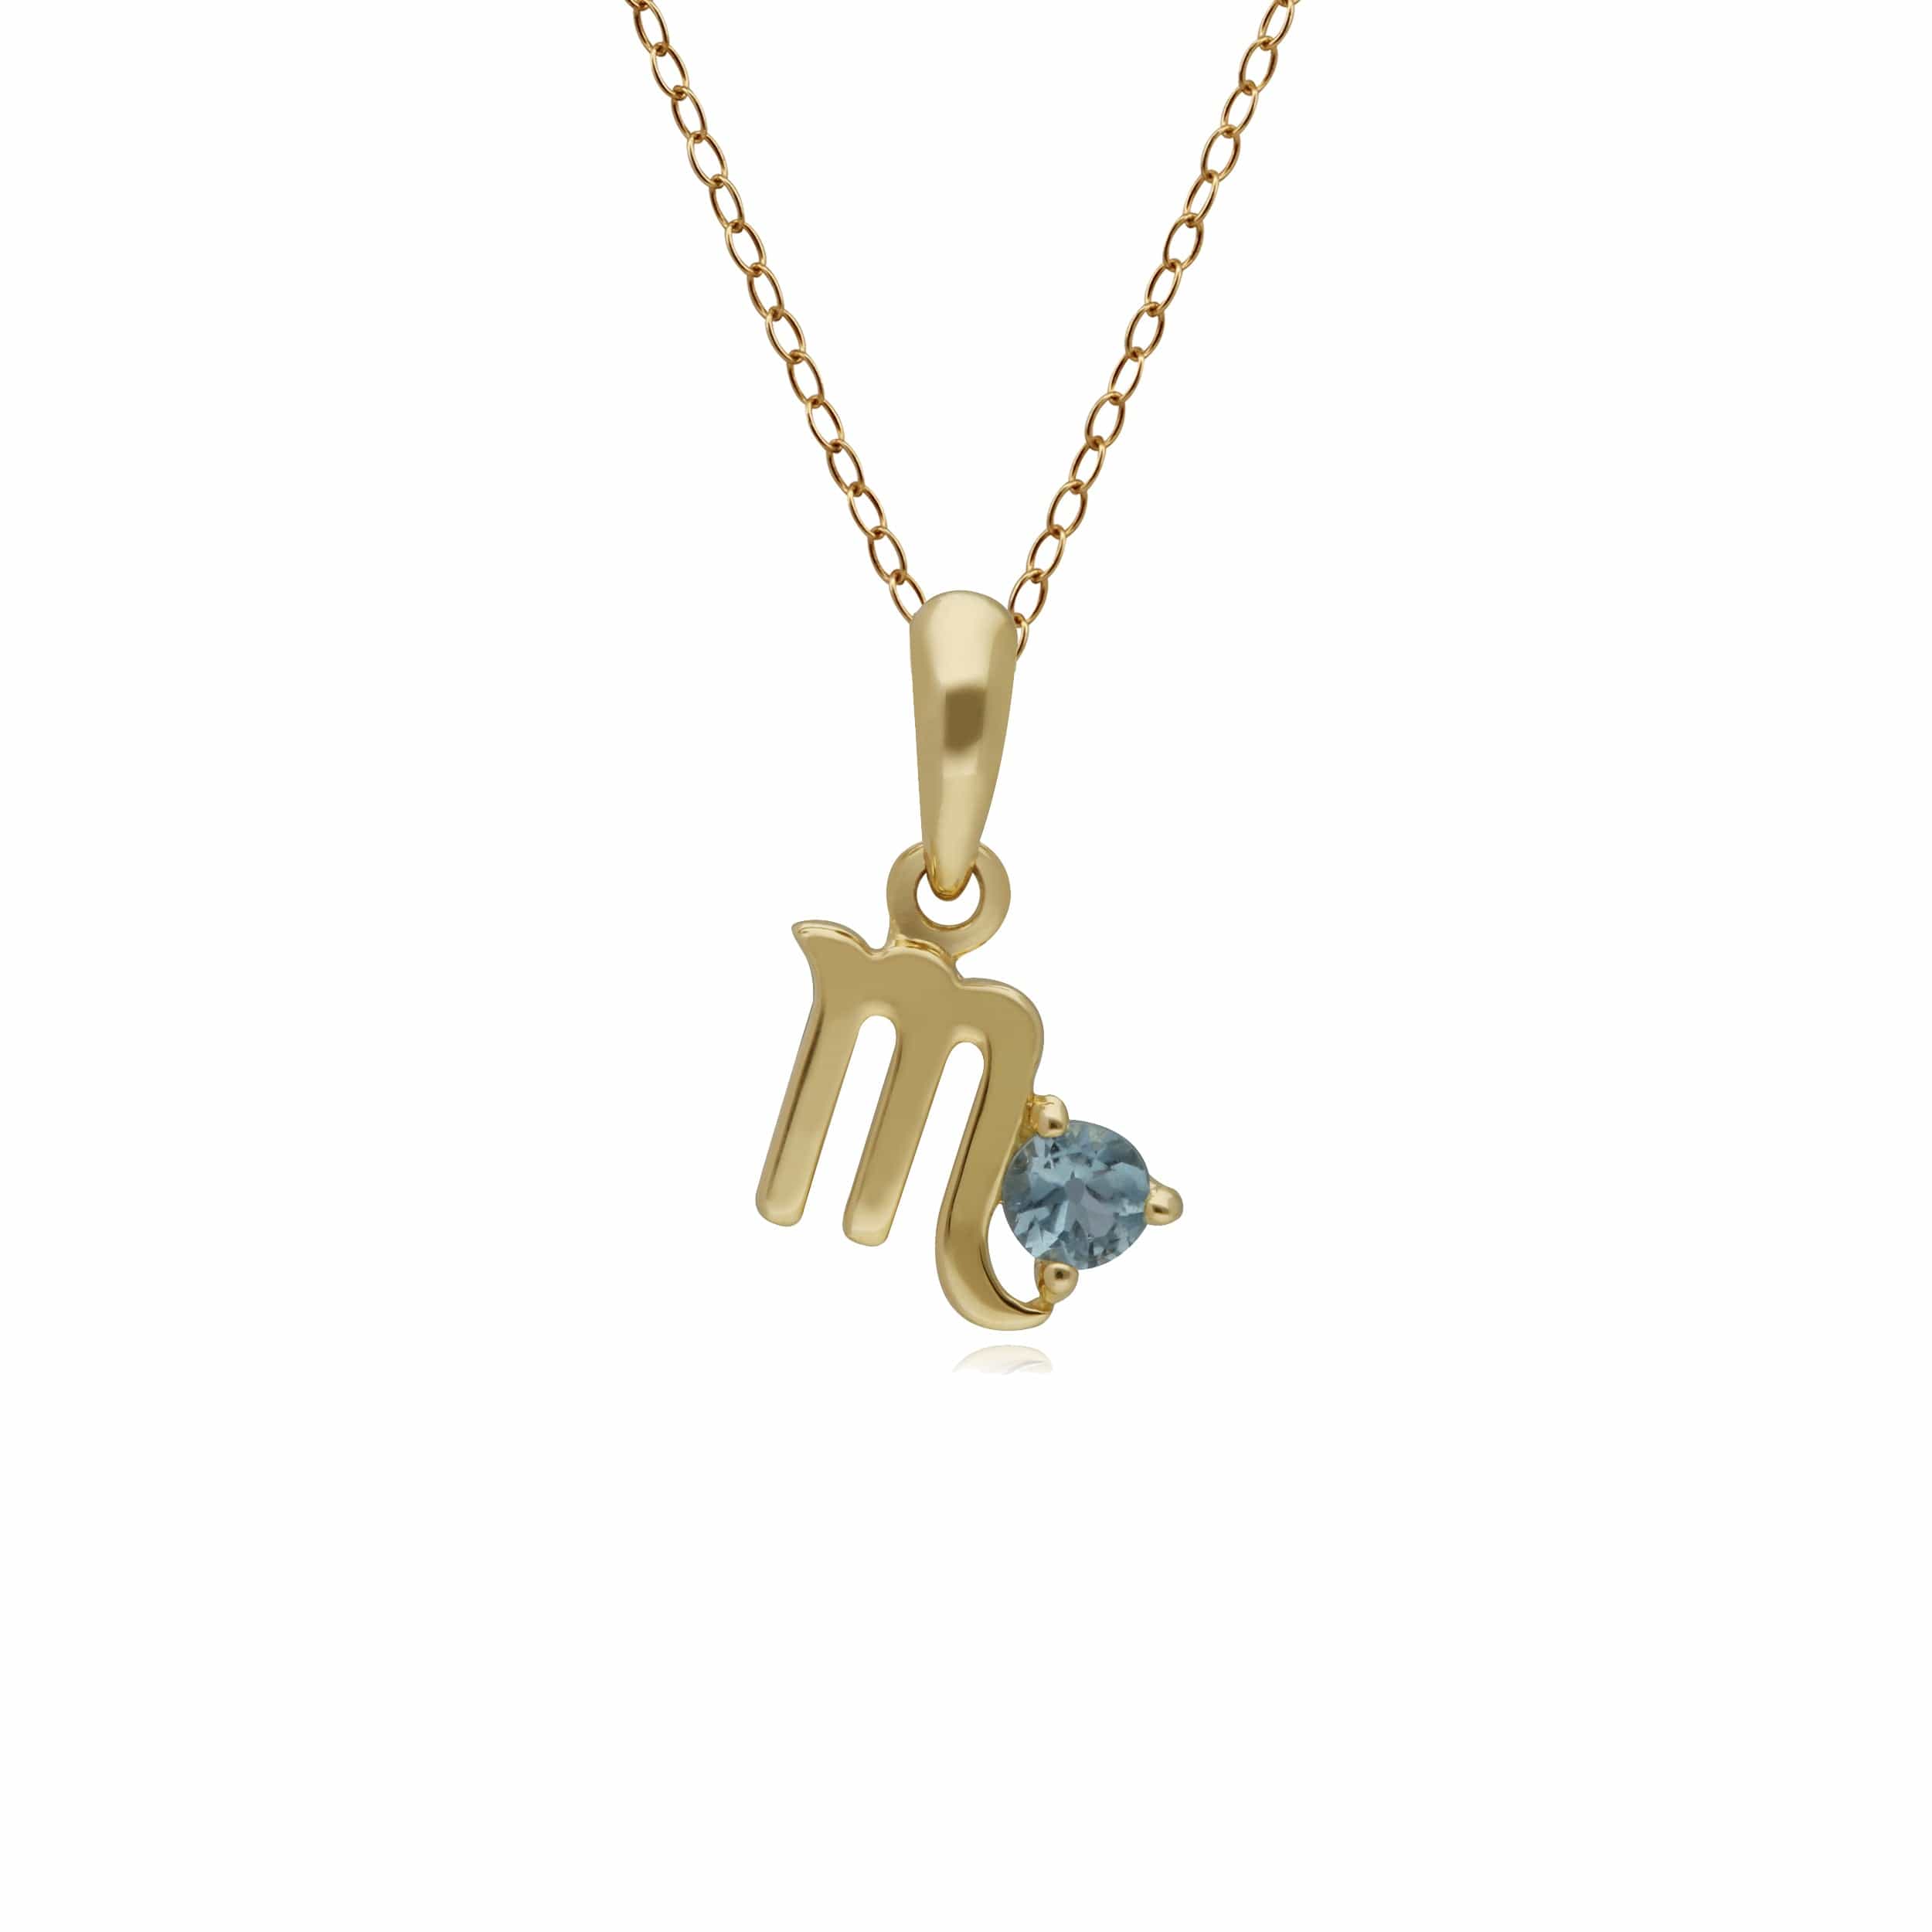 Photos - Pendant / Choker Necklace Blue Topaz Scorpio Zodiac Charm Necklace in 9ct Yellow Gold